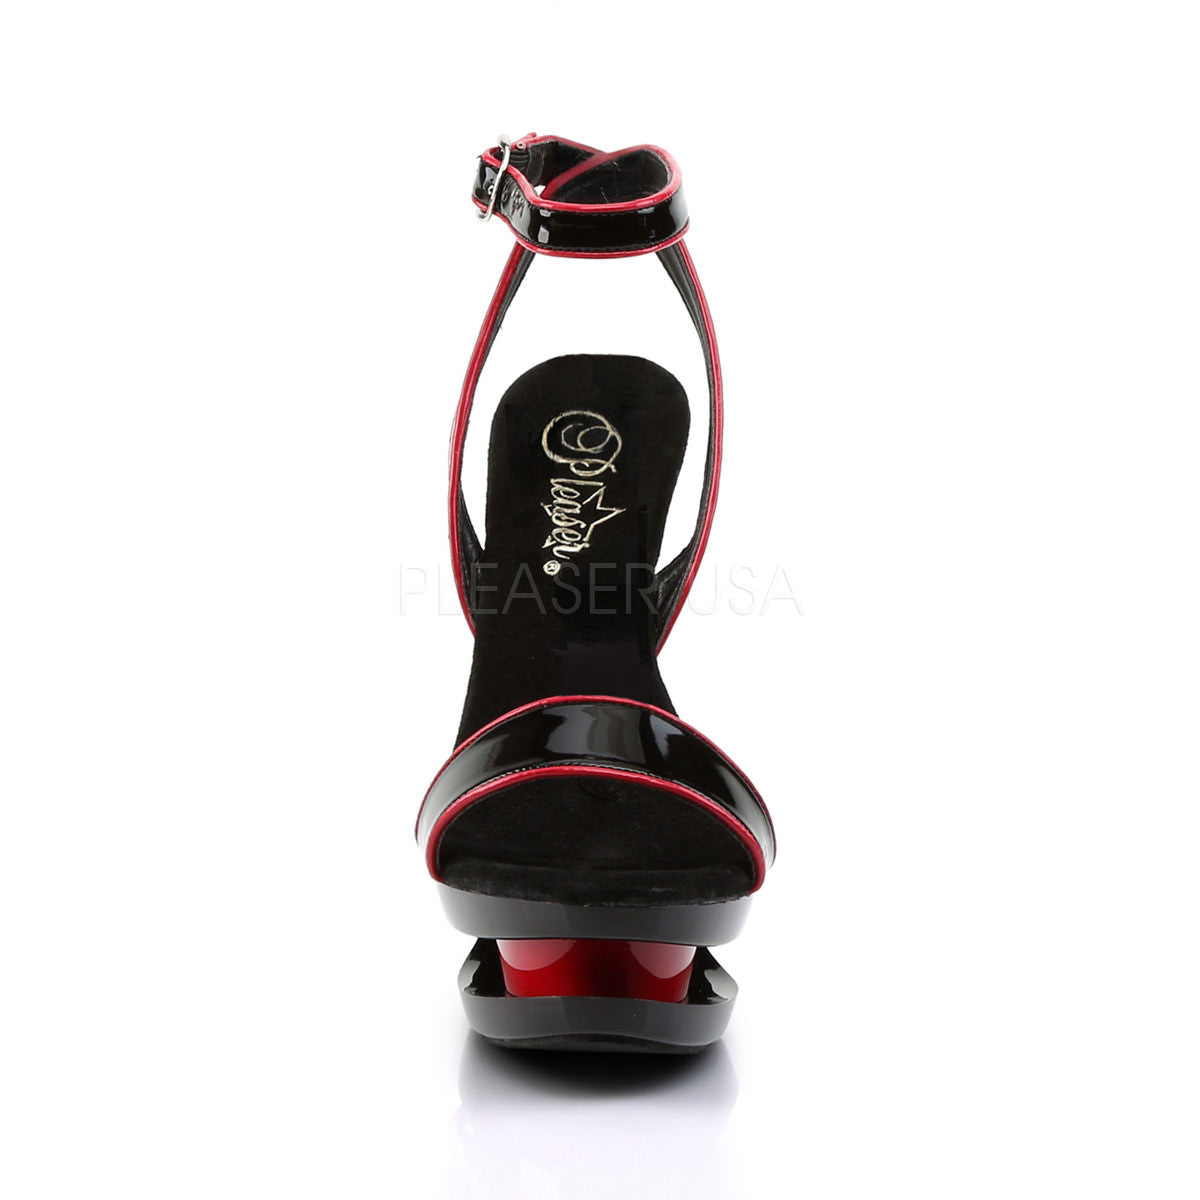 PLEASER BLONDIE-631-2 Black Red Pat-Black-Red Stiletto Sandals - Shoecup.com - 2